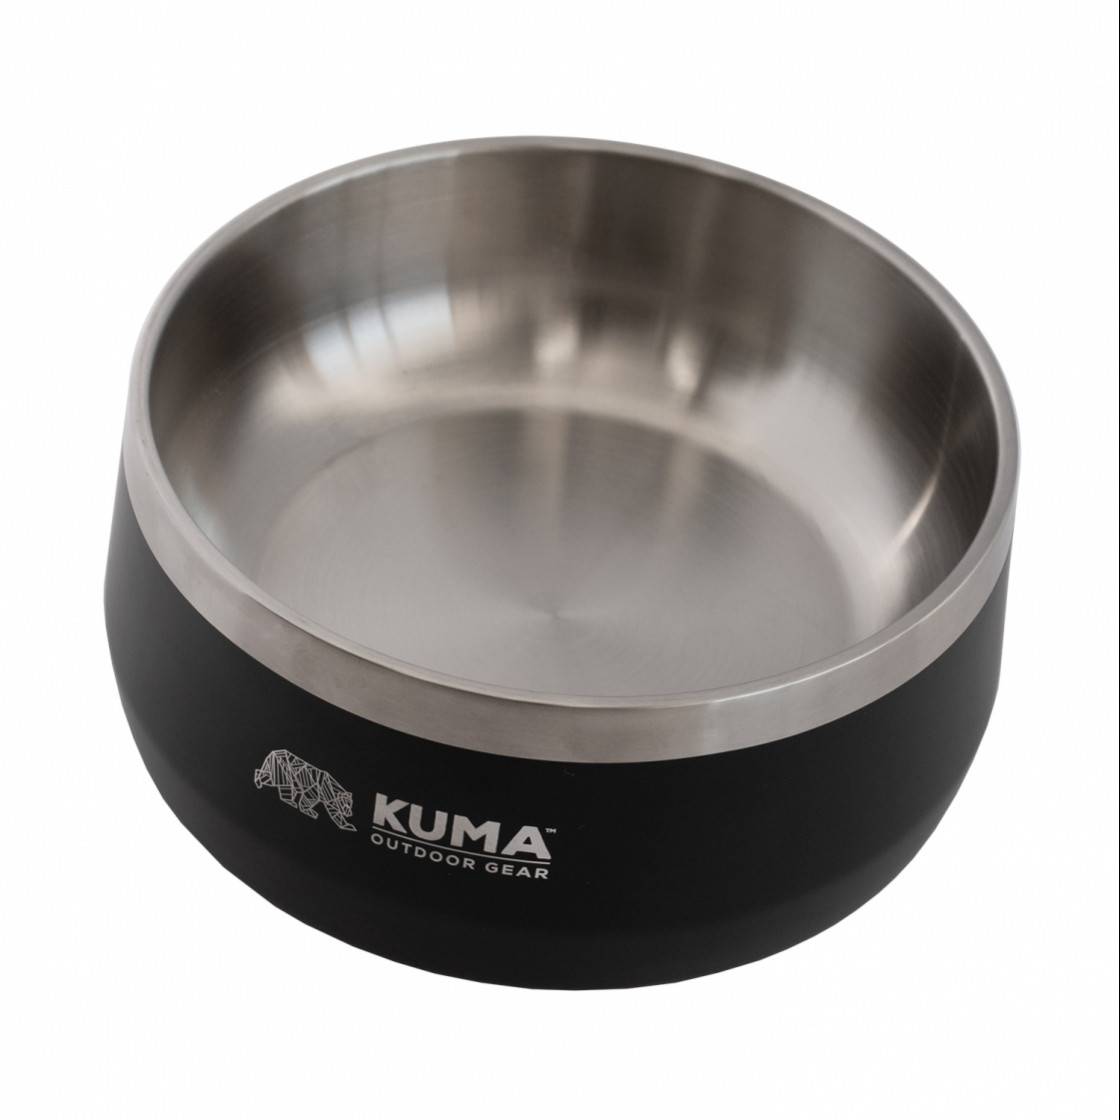 Kuma Stainless Steel Dog Bowl - Black